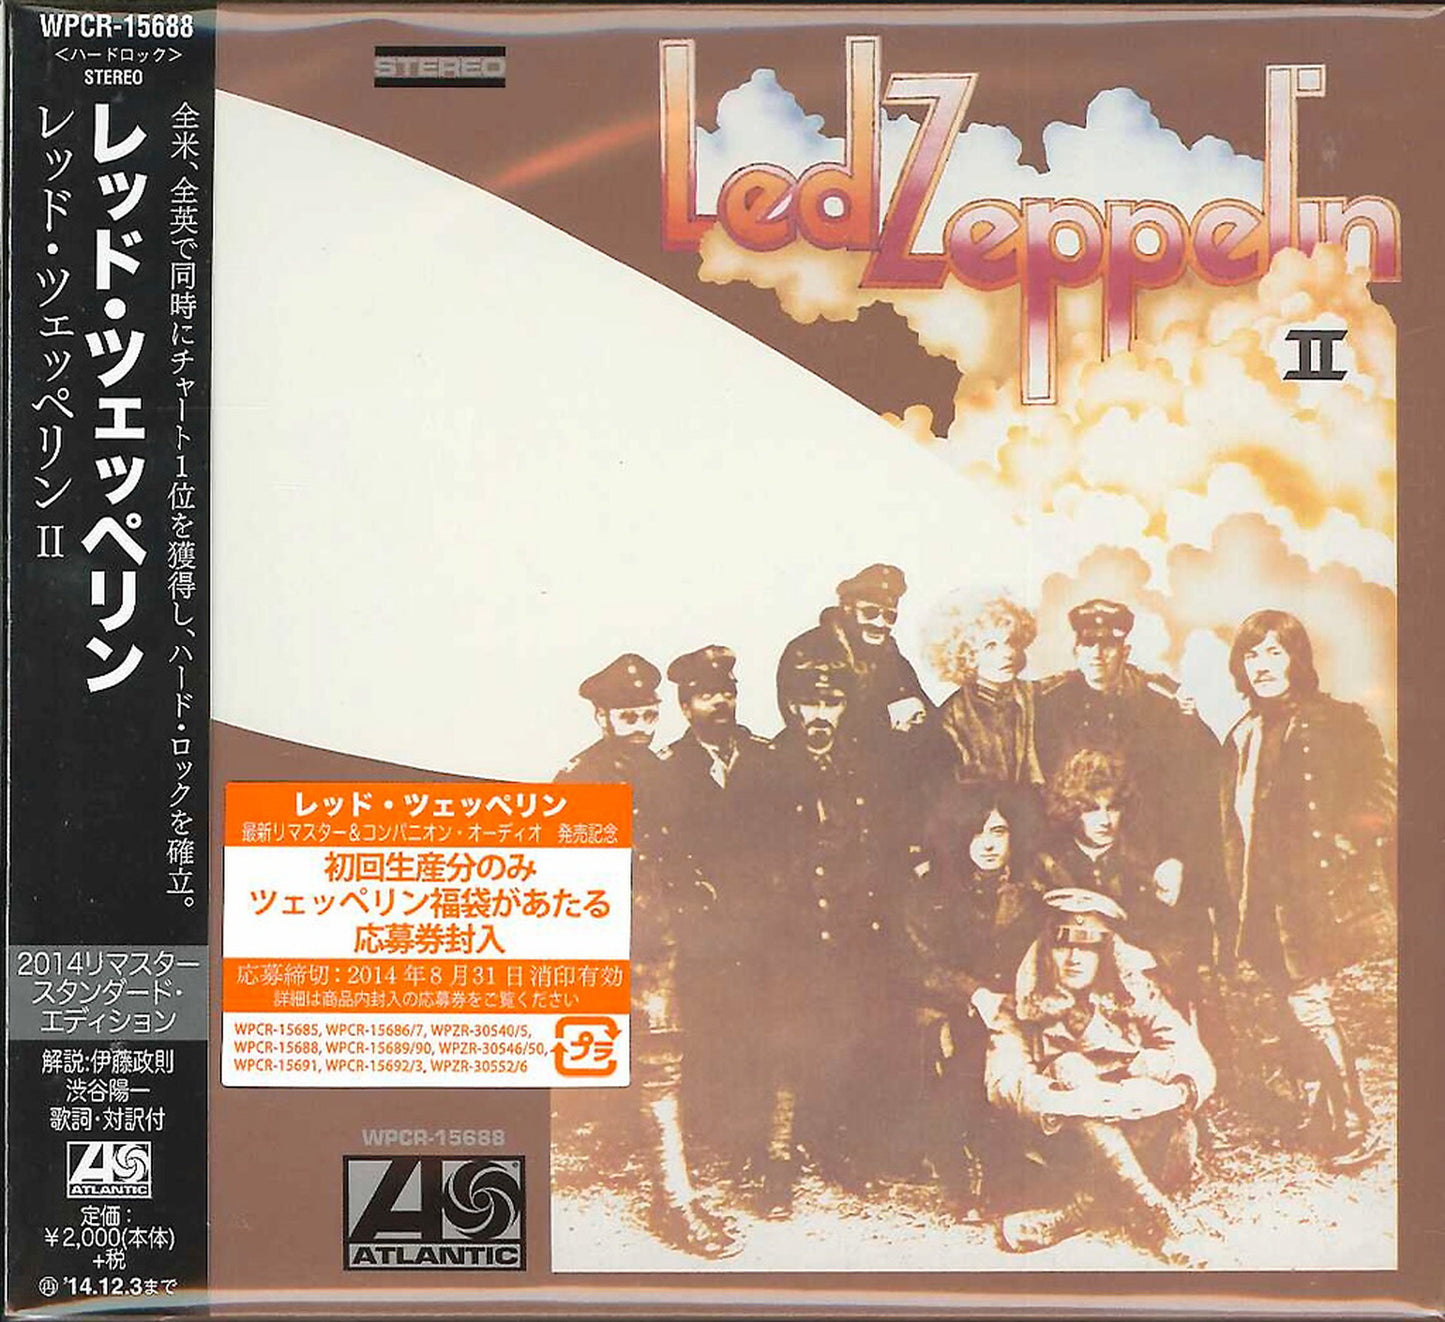 Led Zeppelin - Led Zeppelin Ii Standard Edition - Japan CD